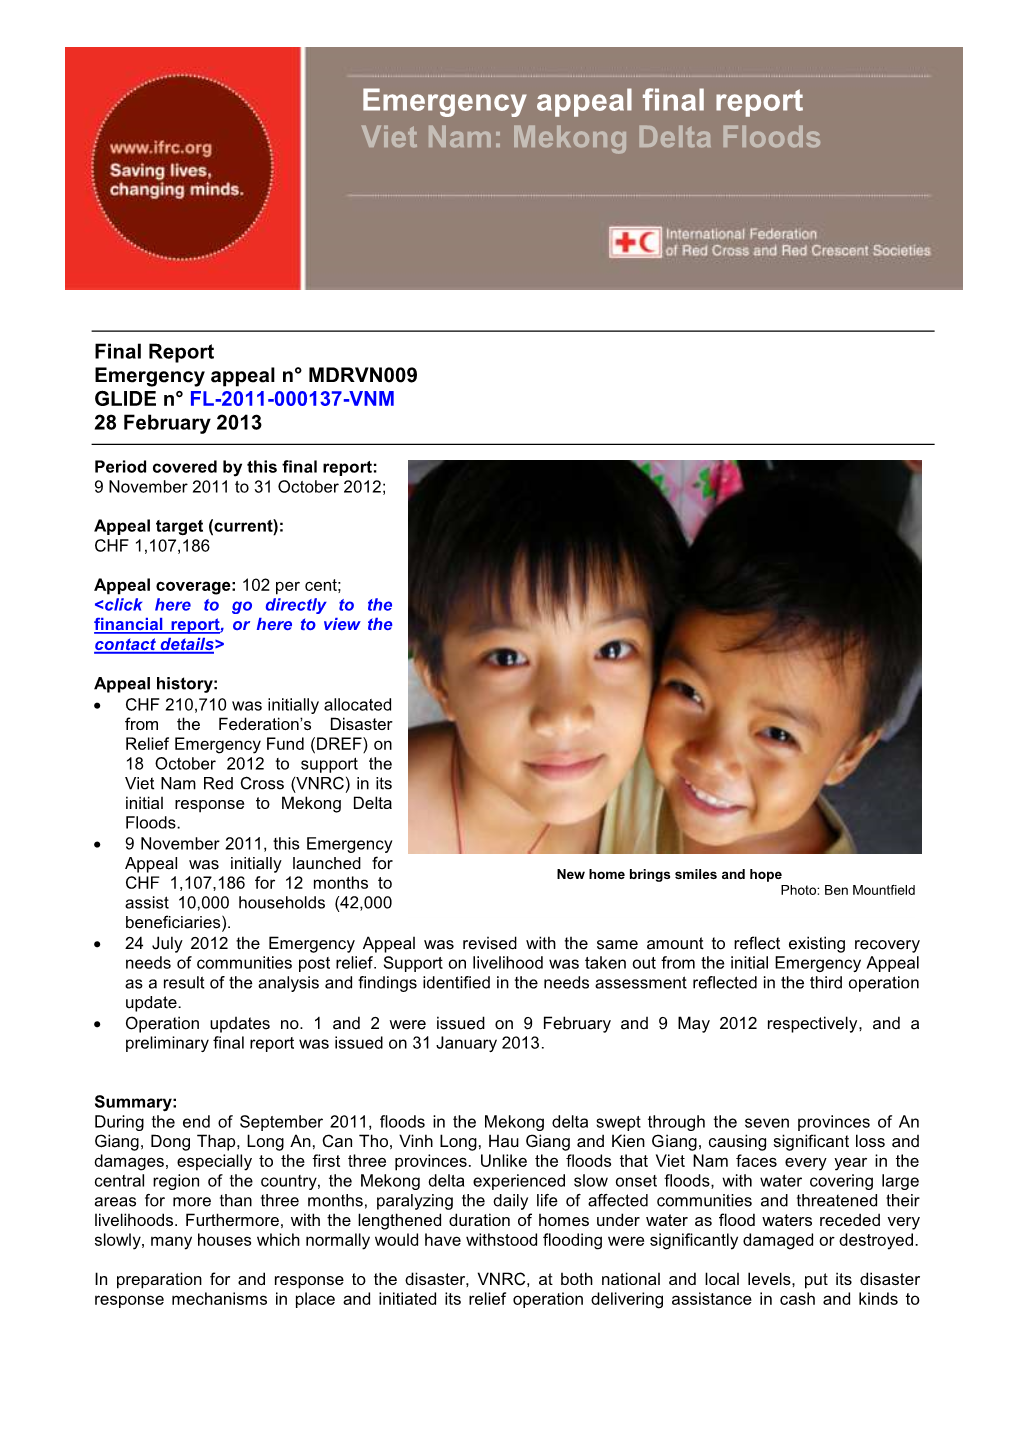 Emergency Appeal Final Report Viet Nam: Mekong Delta Floods